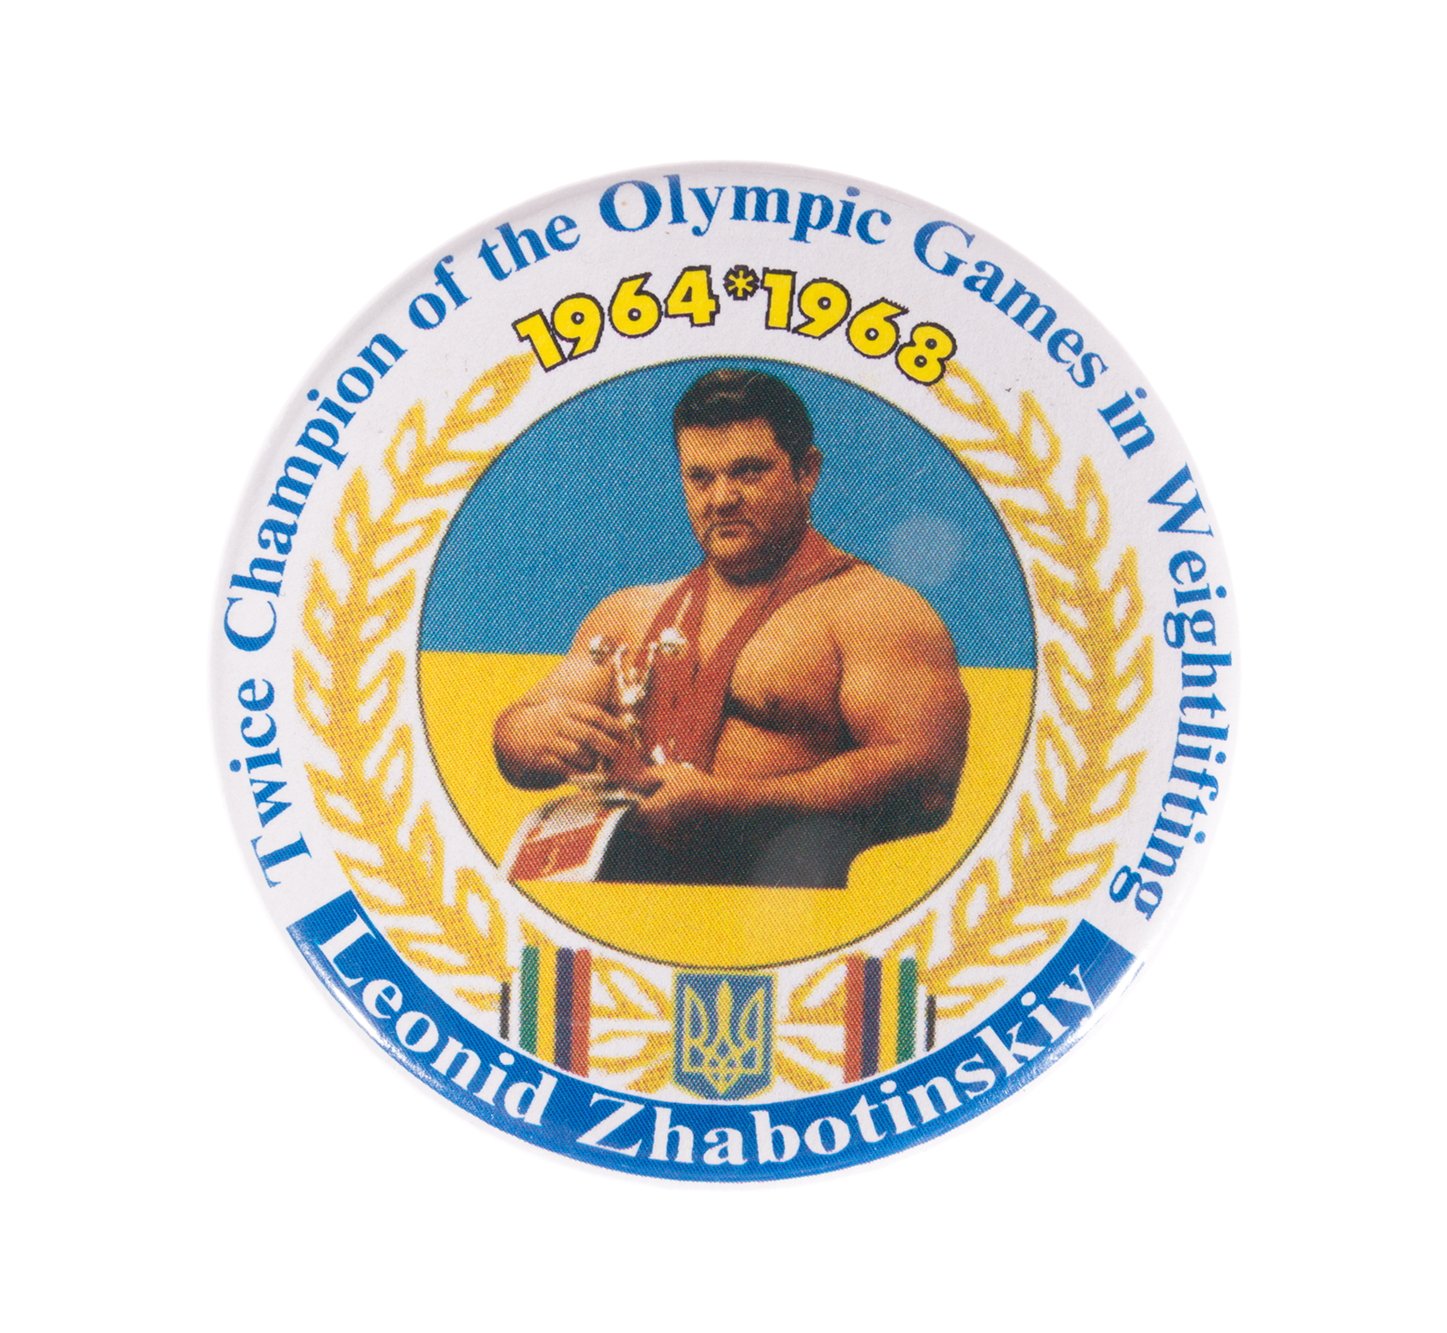 Leonid Zhabotinsky souvenir badge 1964-1968